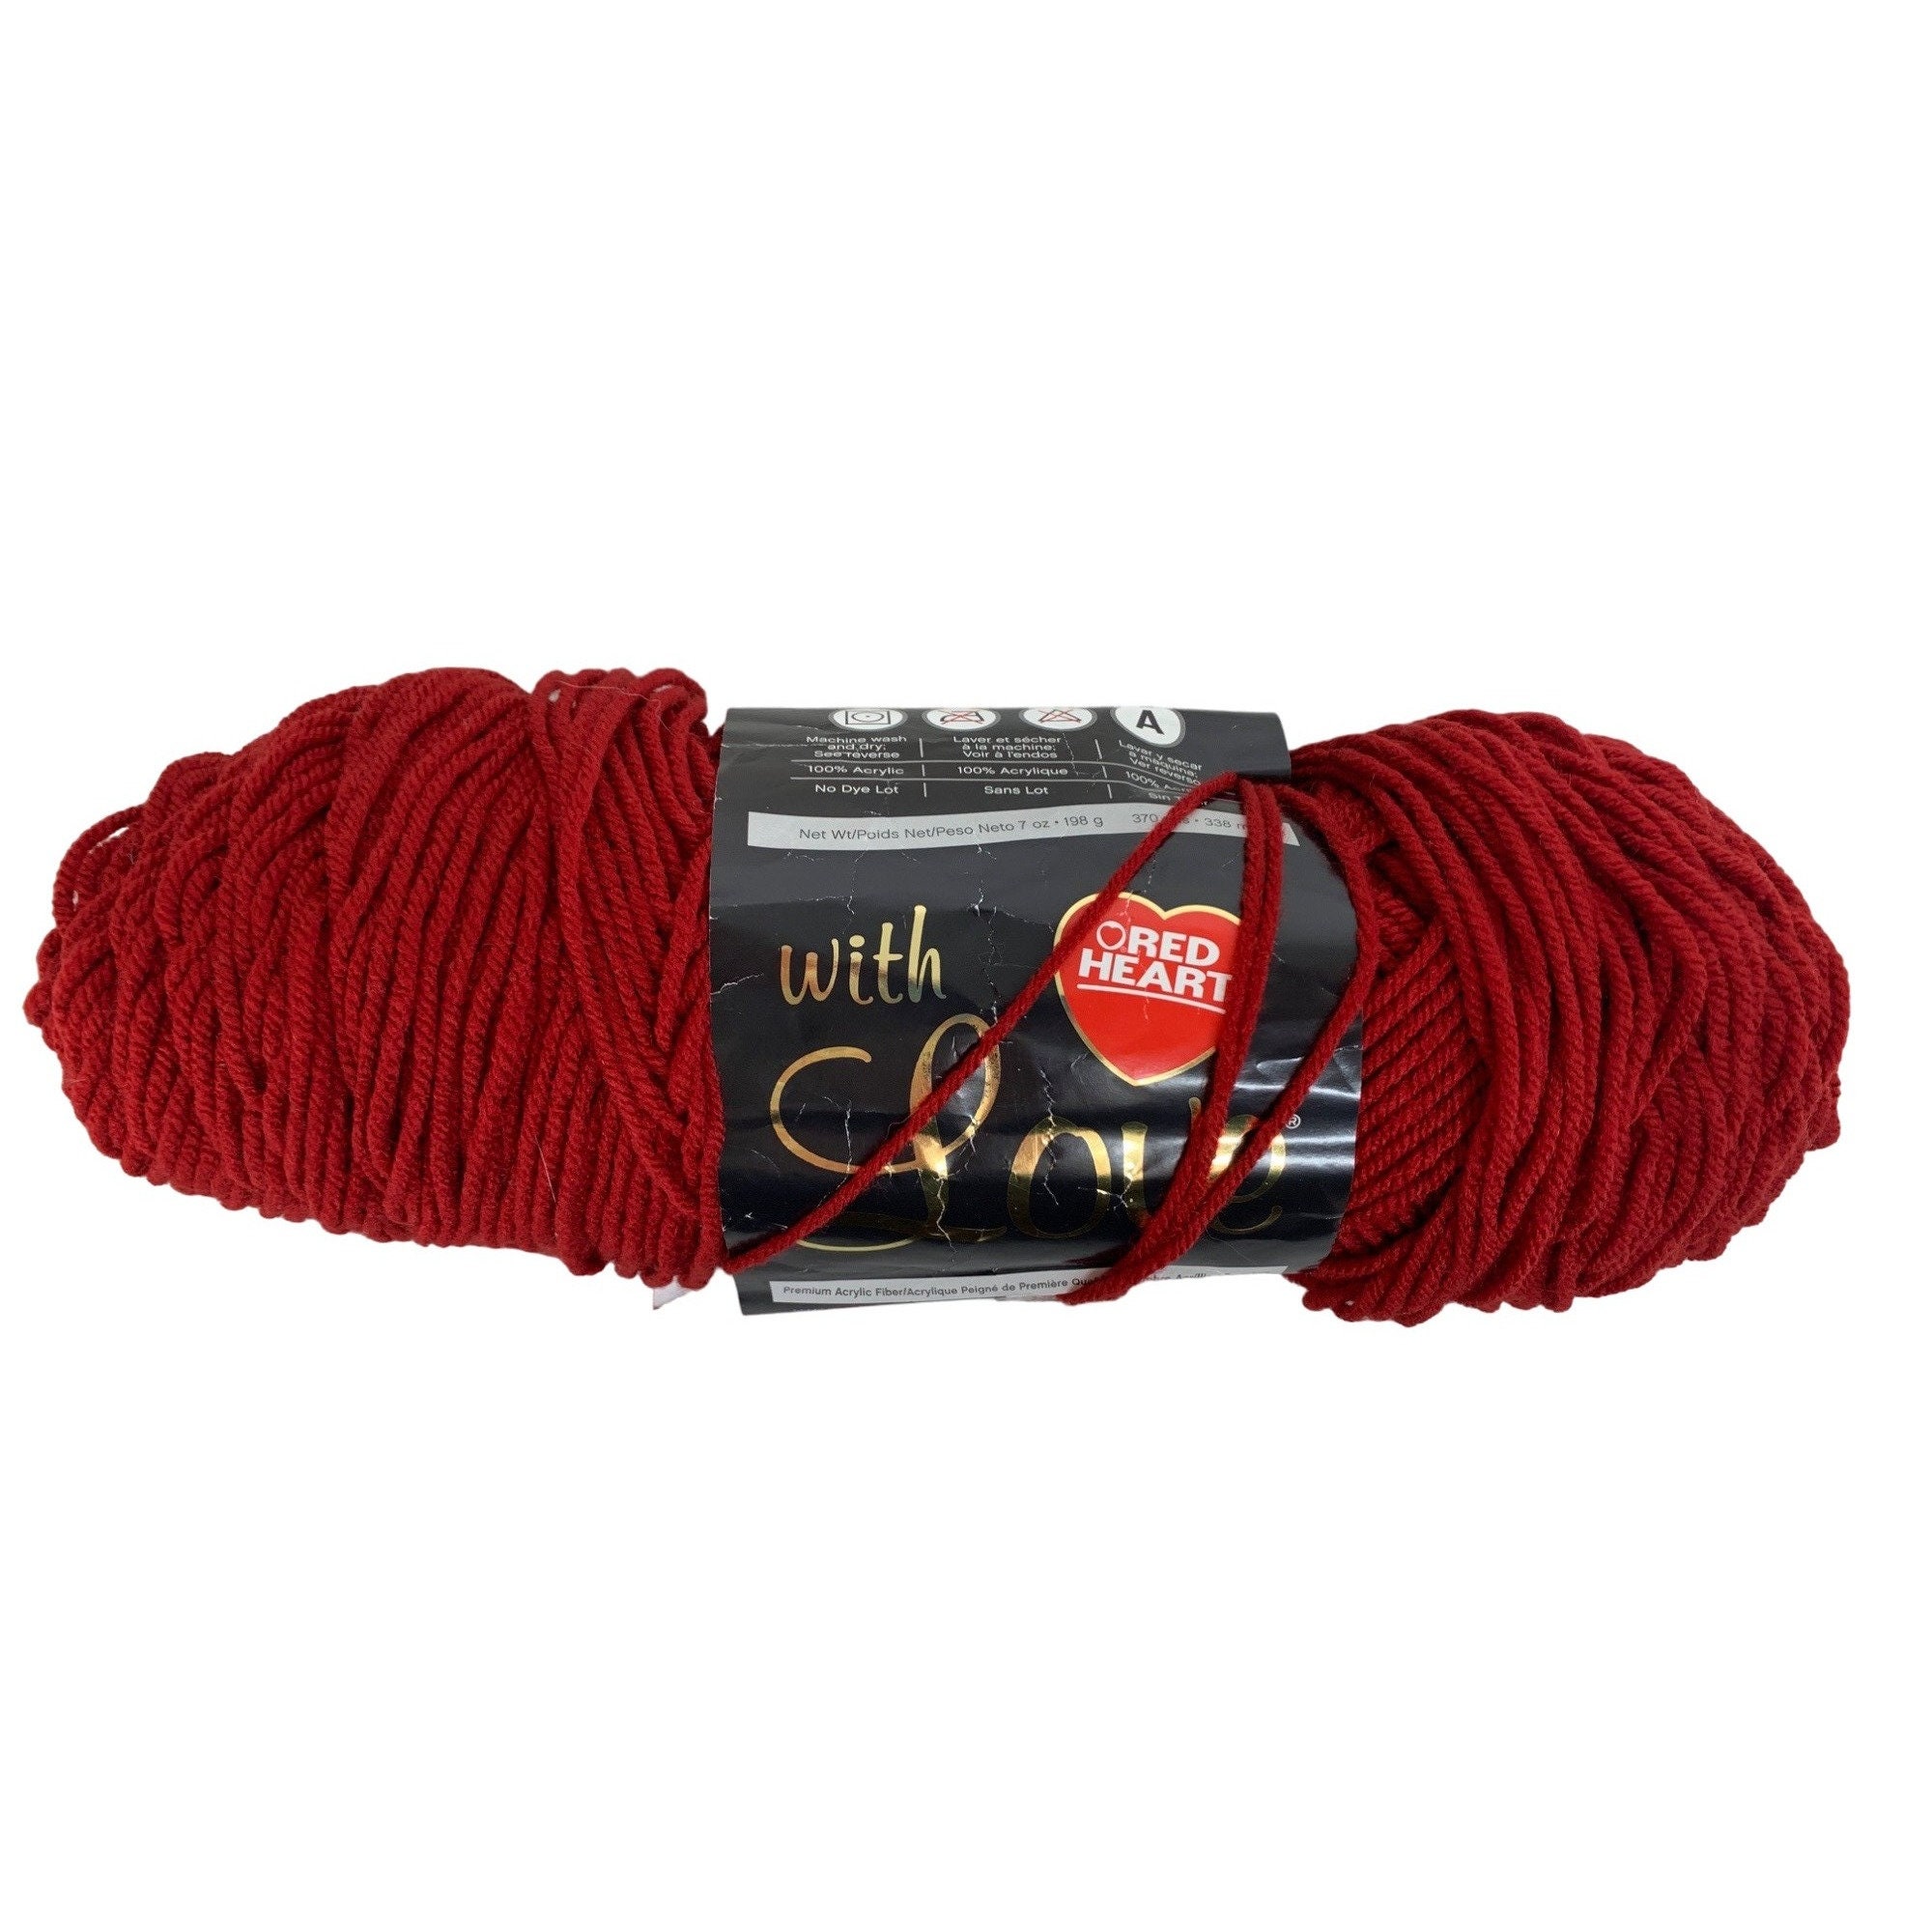 Red Heart with Love Jadeite Yarn - 3 Pack of 198g/7oz - Acrylic - 4 Medium  (Worsted) - 370 Yards - Knitting/Crochet